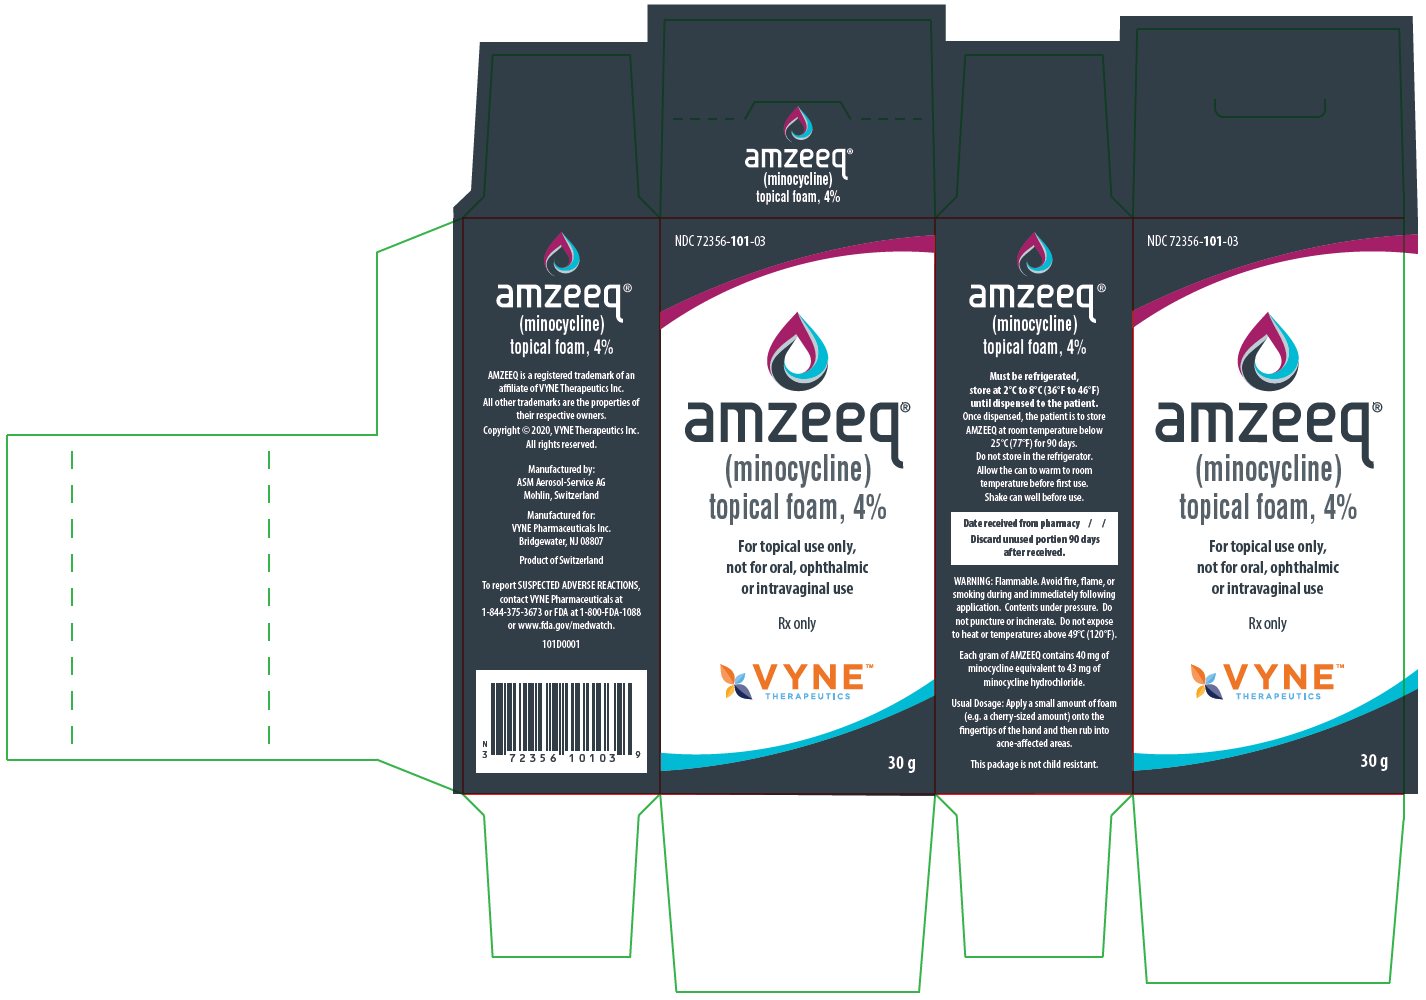 Amzeeq (minocycline) topical foam, 4% carton label